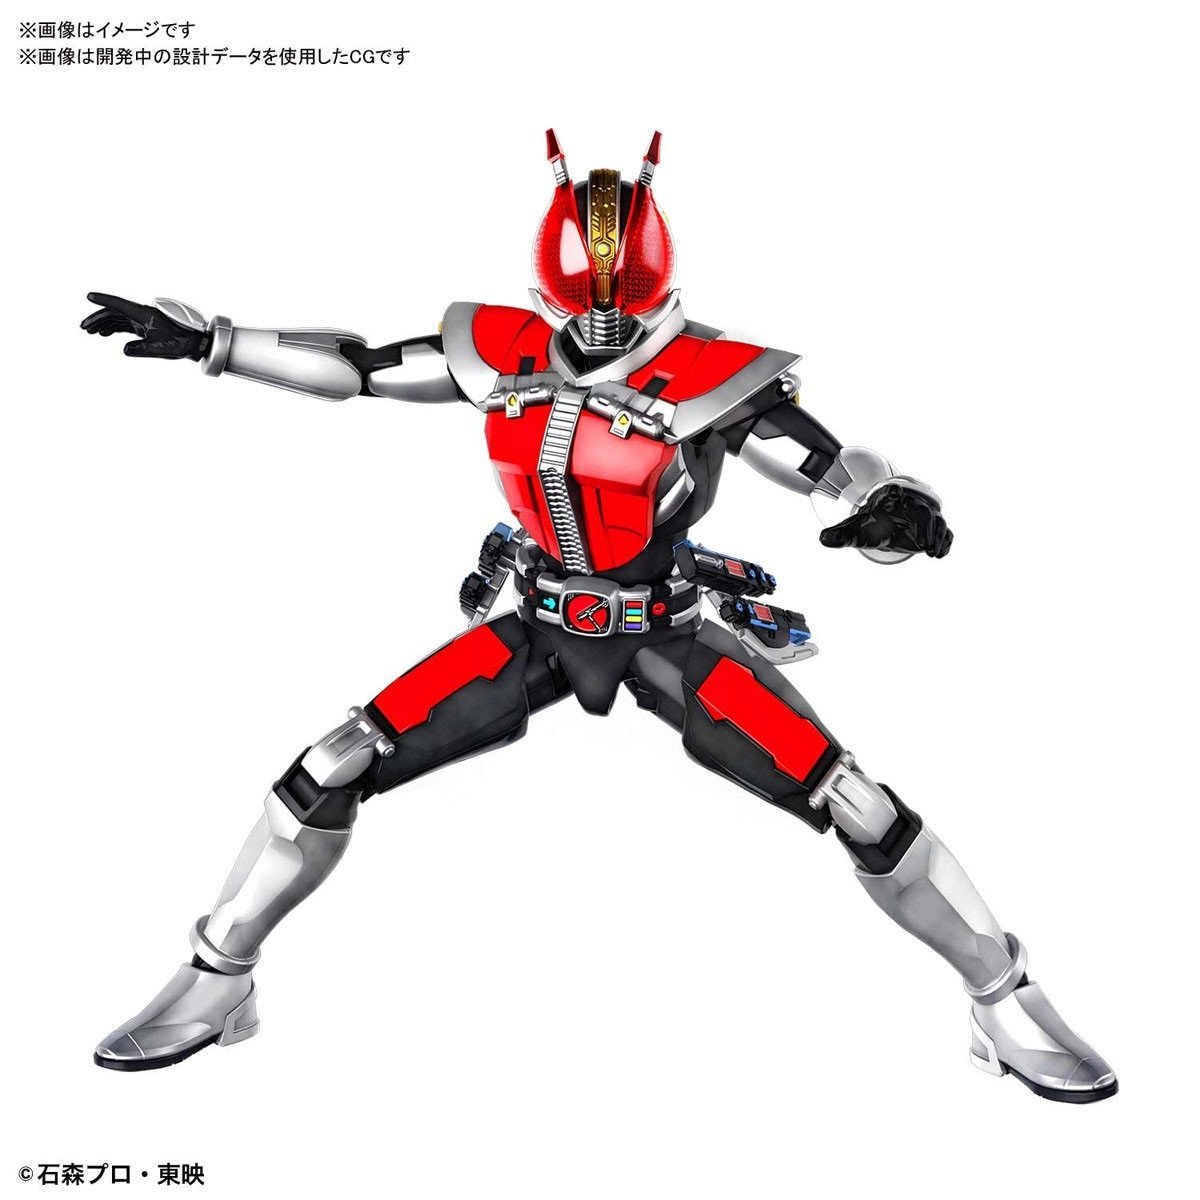 Kamen Rider Figure-rise Standard Masked Rider Den-O Sword Form &amp; Flat Form-Bandai-Ace Cards &amp; Collectibles